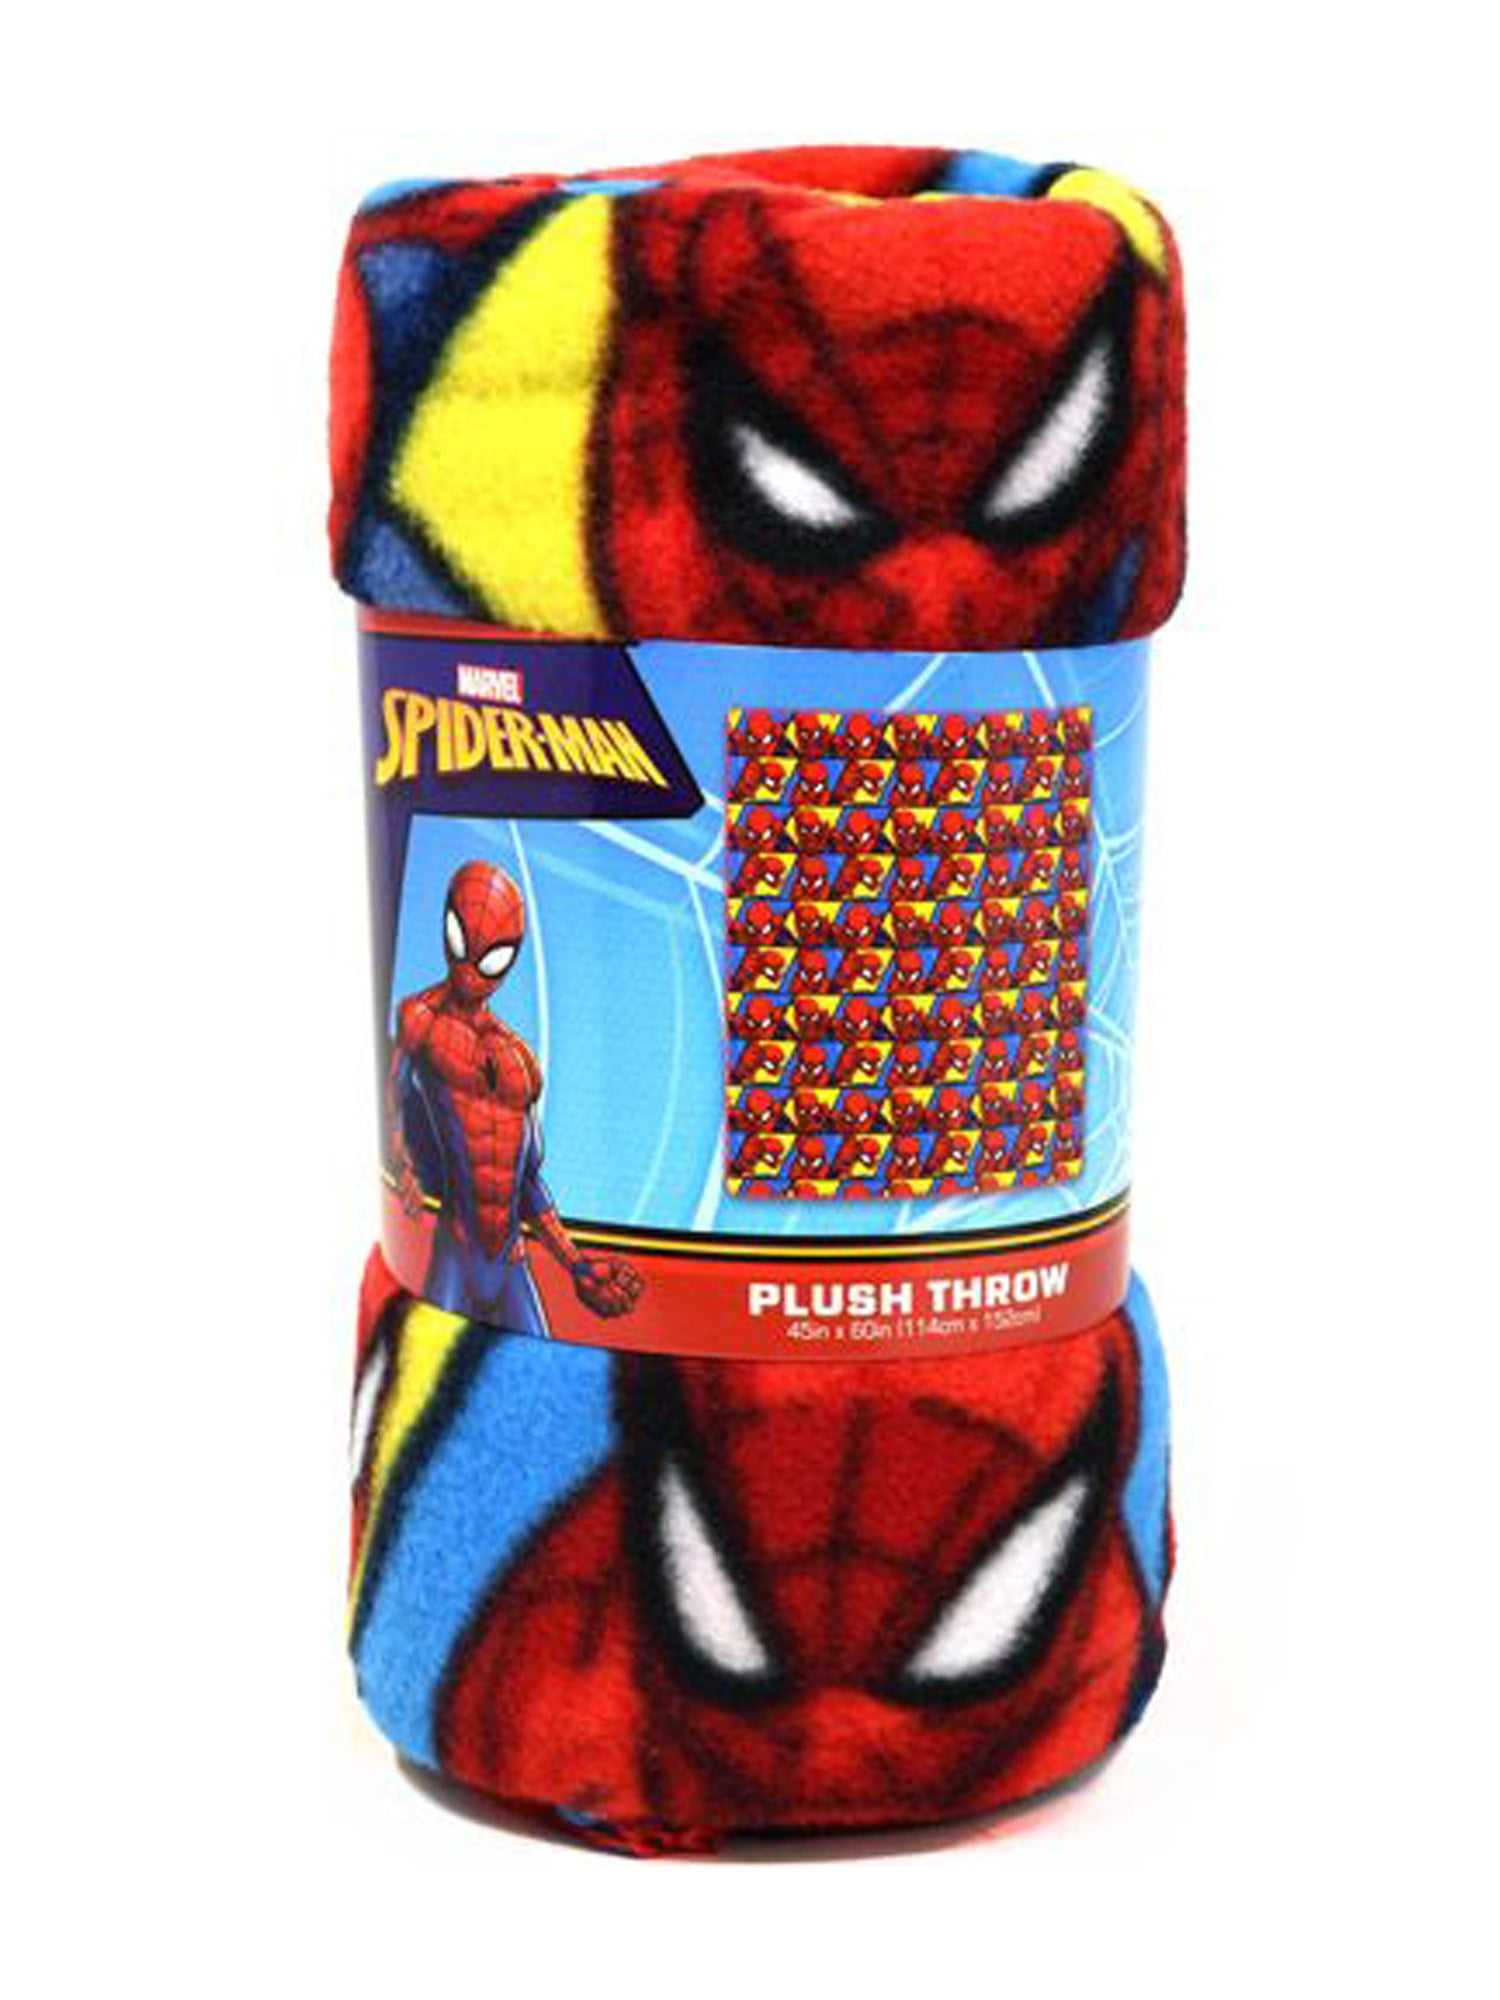 Surreal Entertainment Marvel Spider-Man Amazing Fantasy No. 15 Fleece Throw  Blanket | 60 x 45 Inches